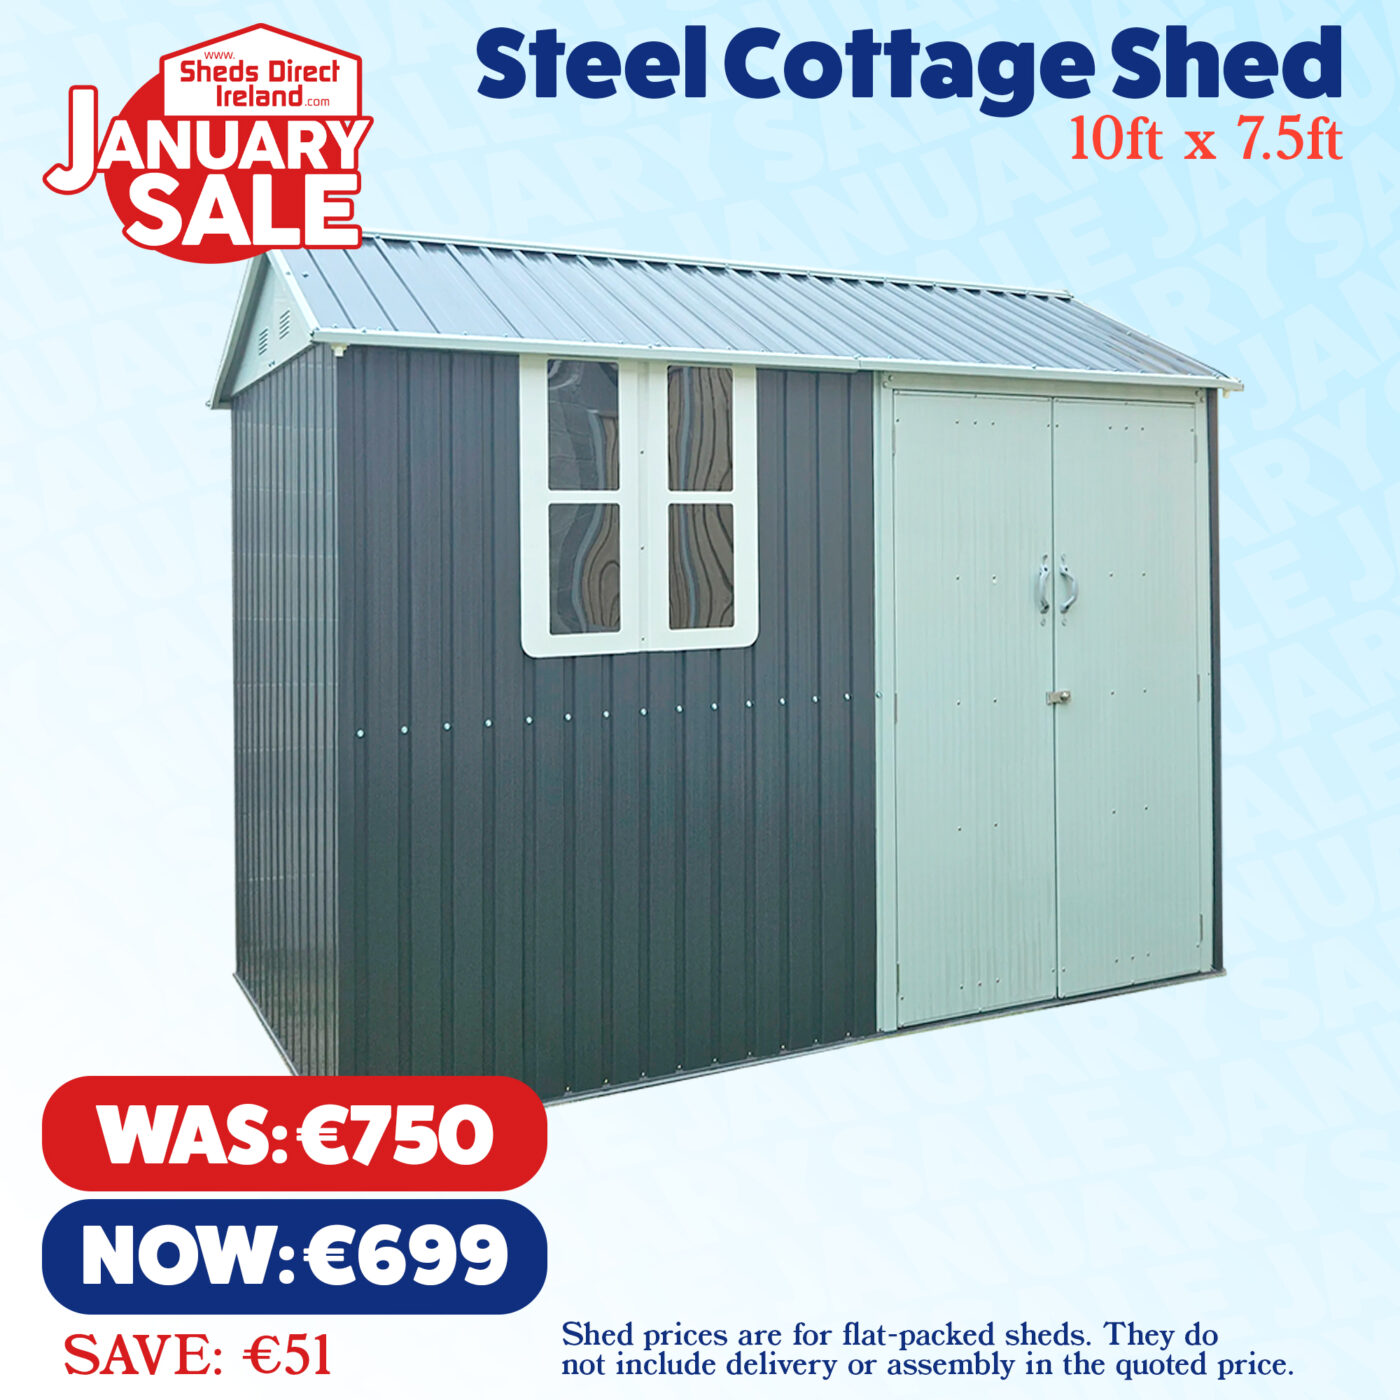 January Sale - Cottage Shed